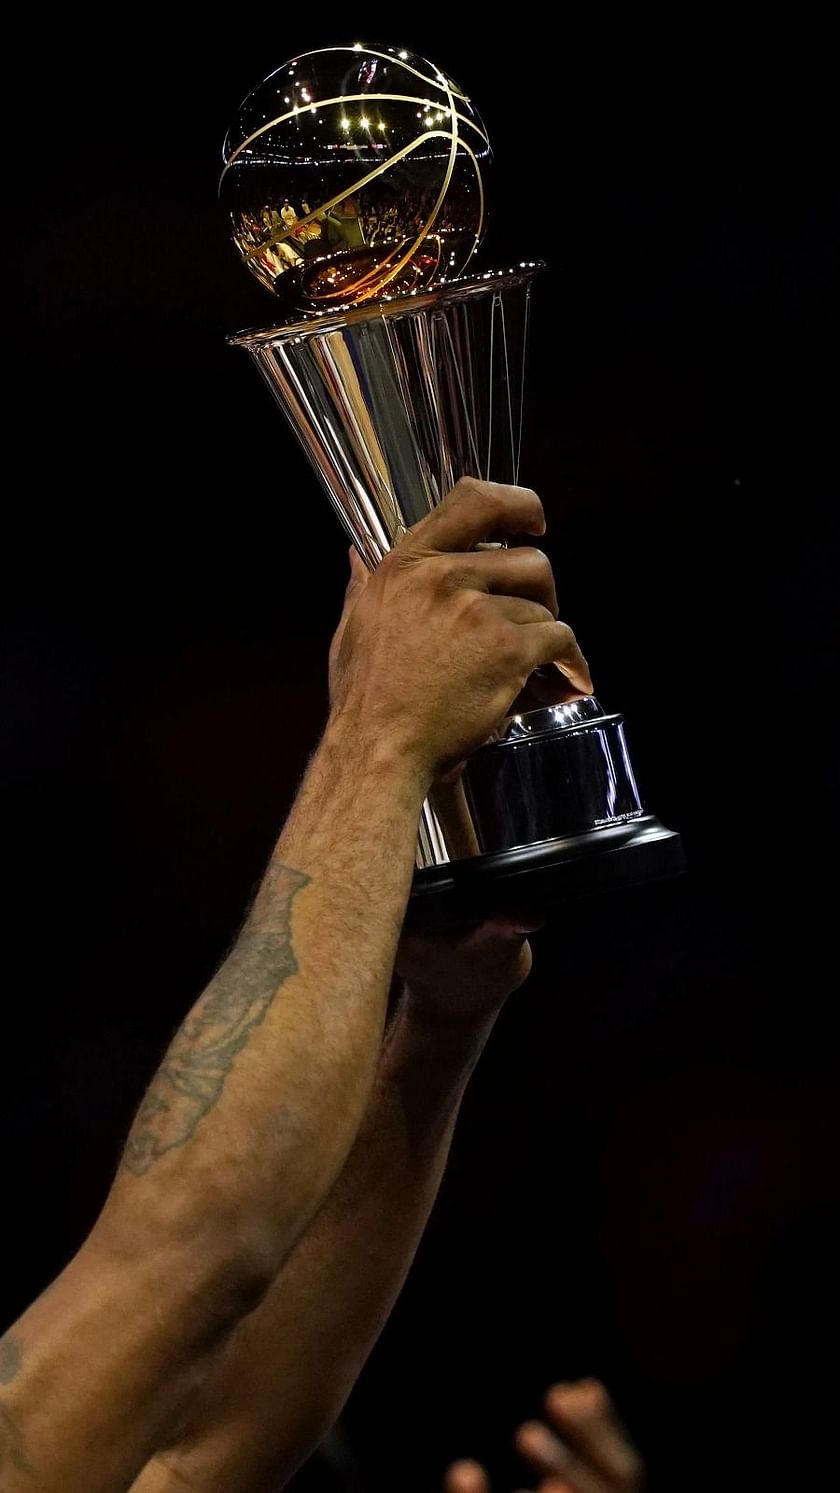 NBA Finals: Who has won the most Bill Russell NBA Finals MVP Awards?